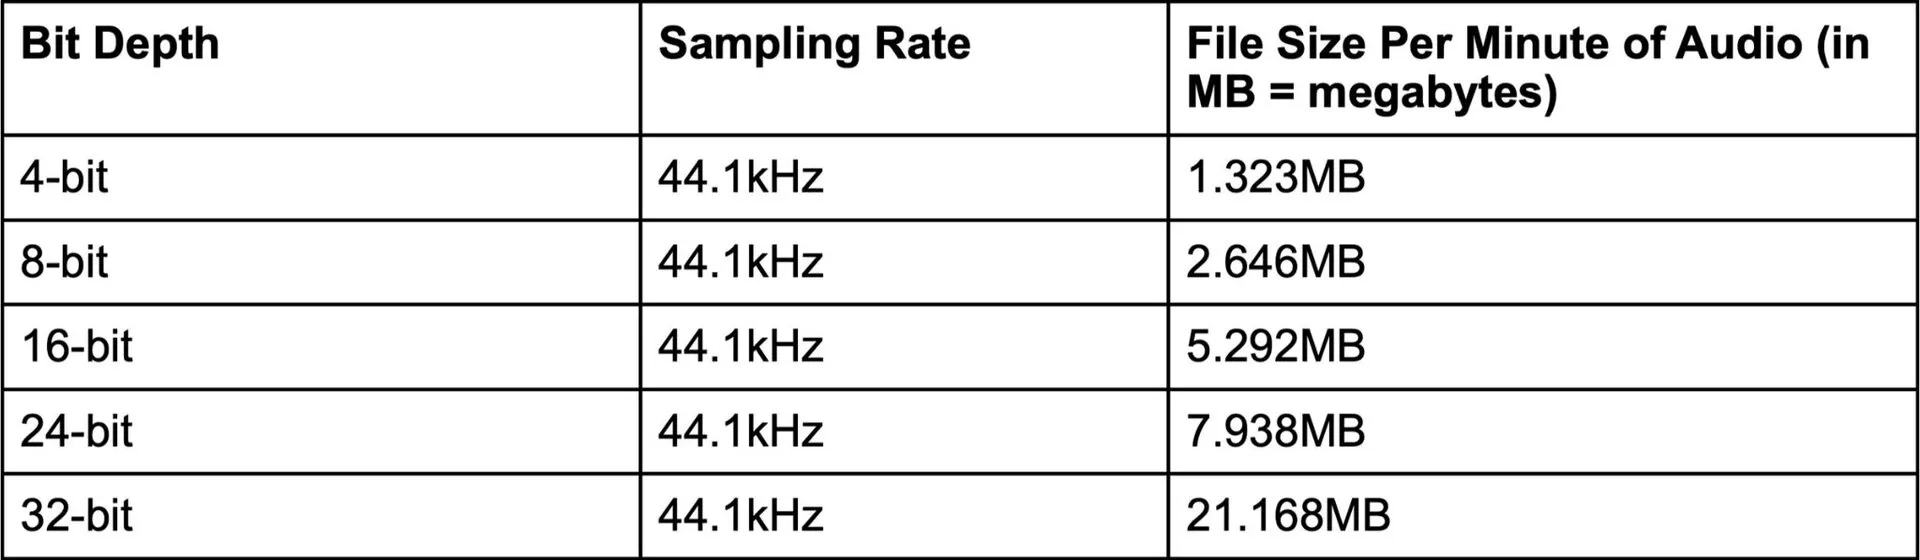 Audio bit depth file size per minute of audio comparison table.